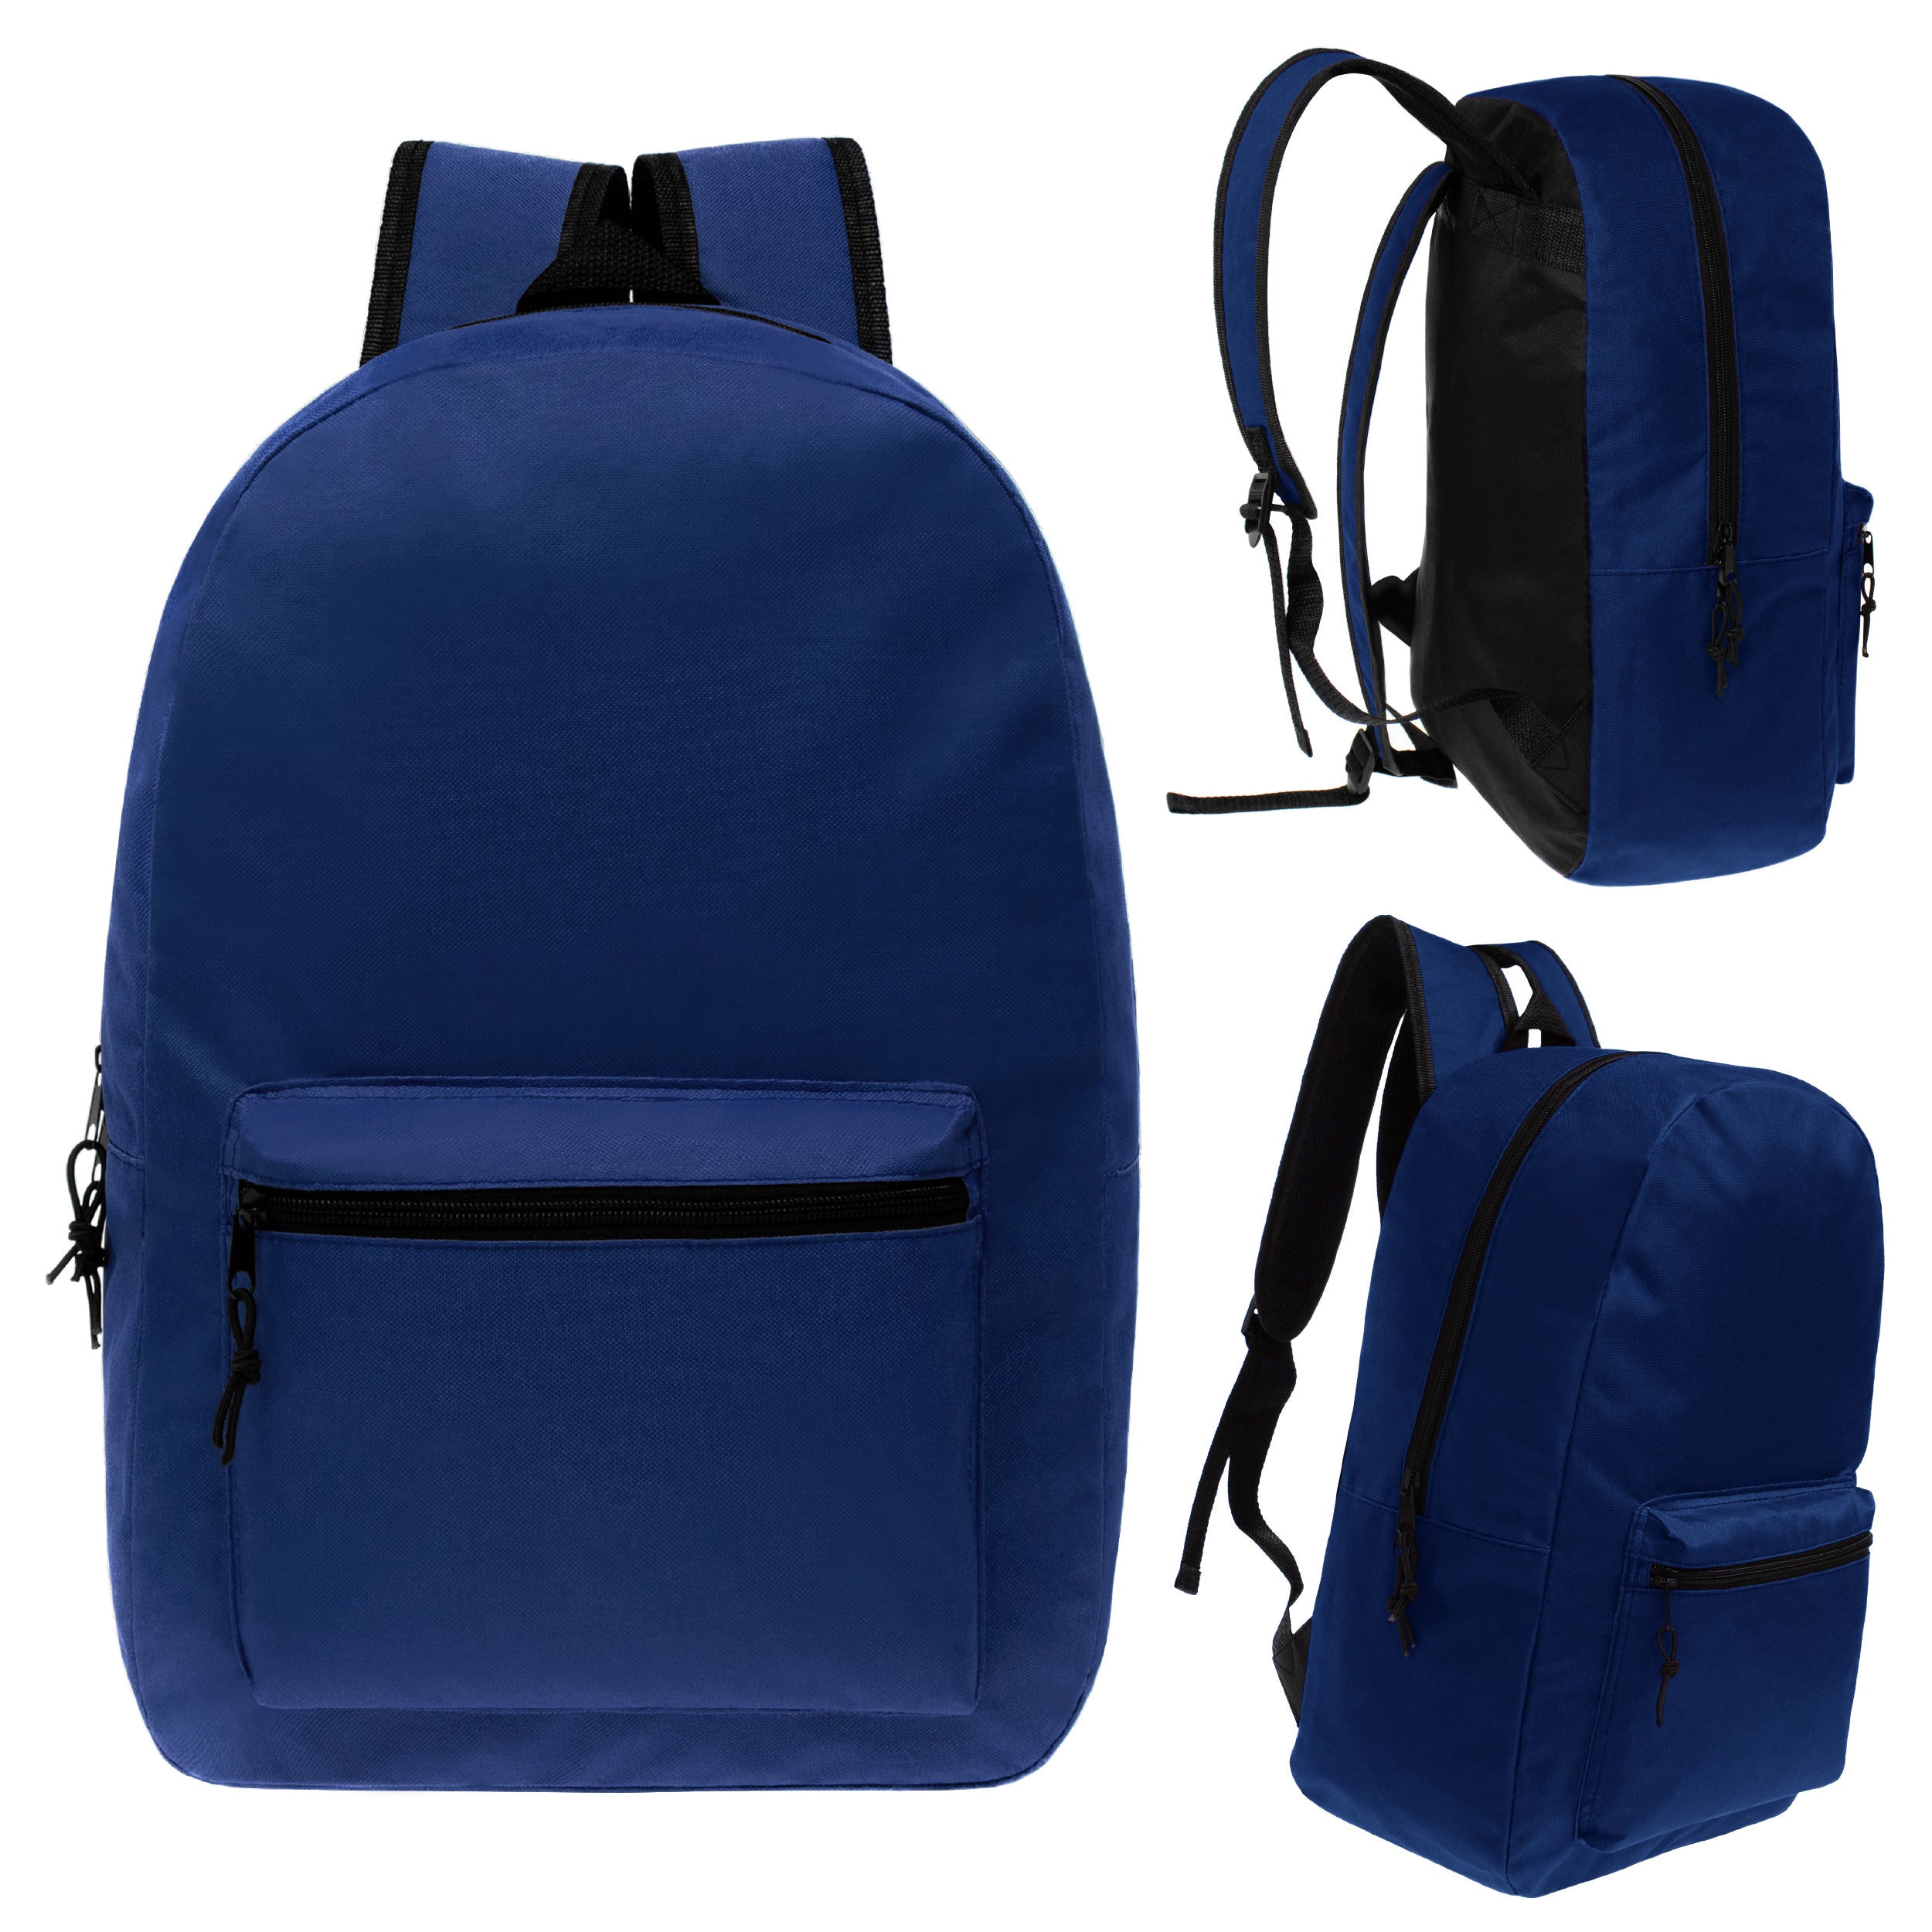 Wholesale Backpacks and School USA Supplies | Backpacks